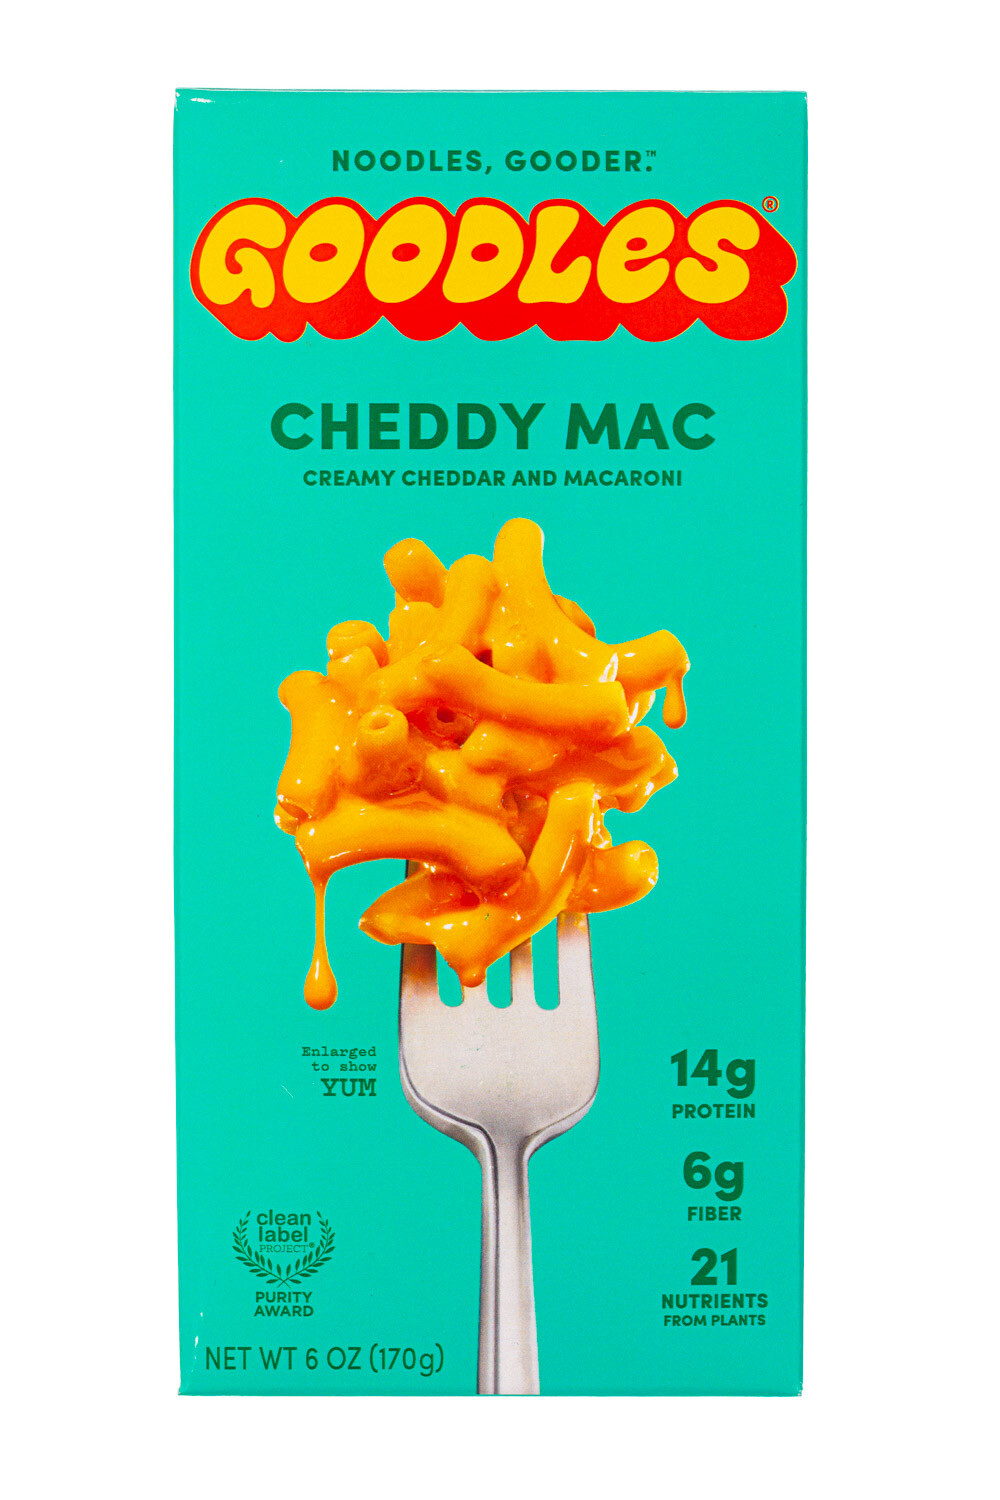 Goodles Cheddy Mac Creamy Cheddar And Macaroni 14g Protein